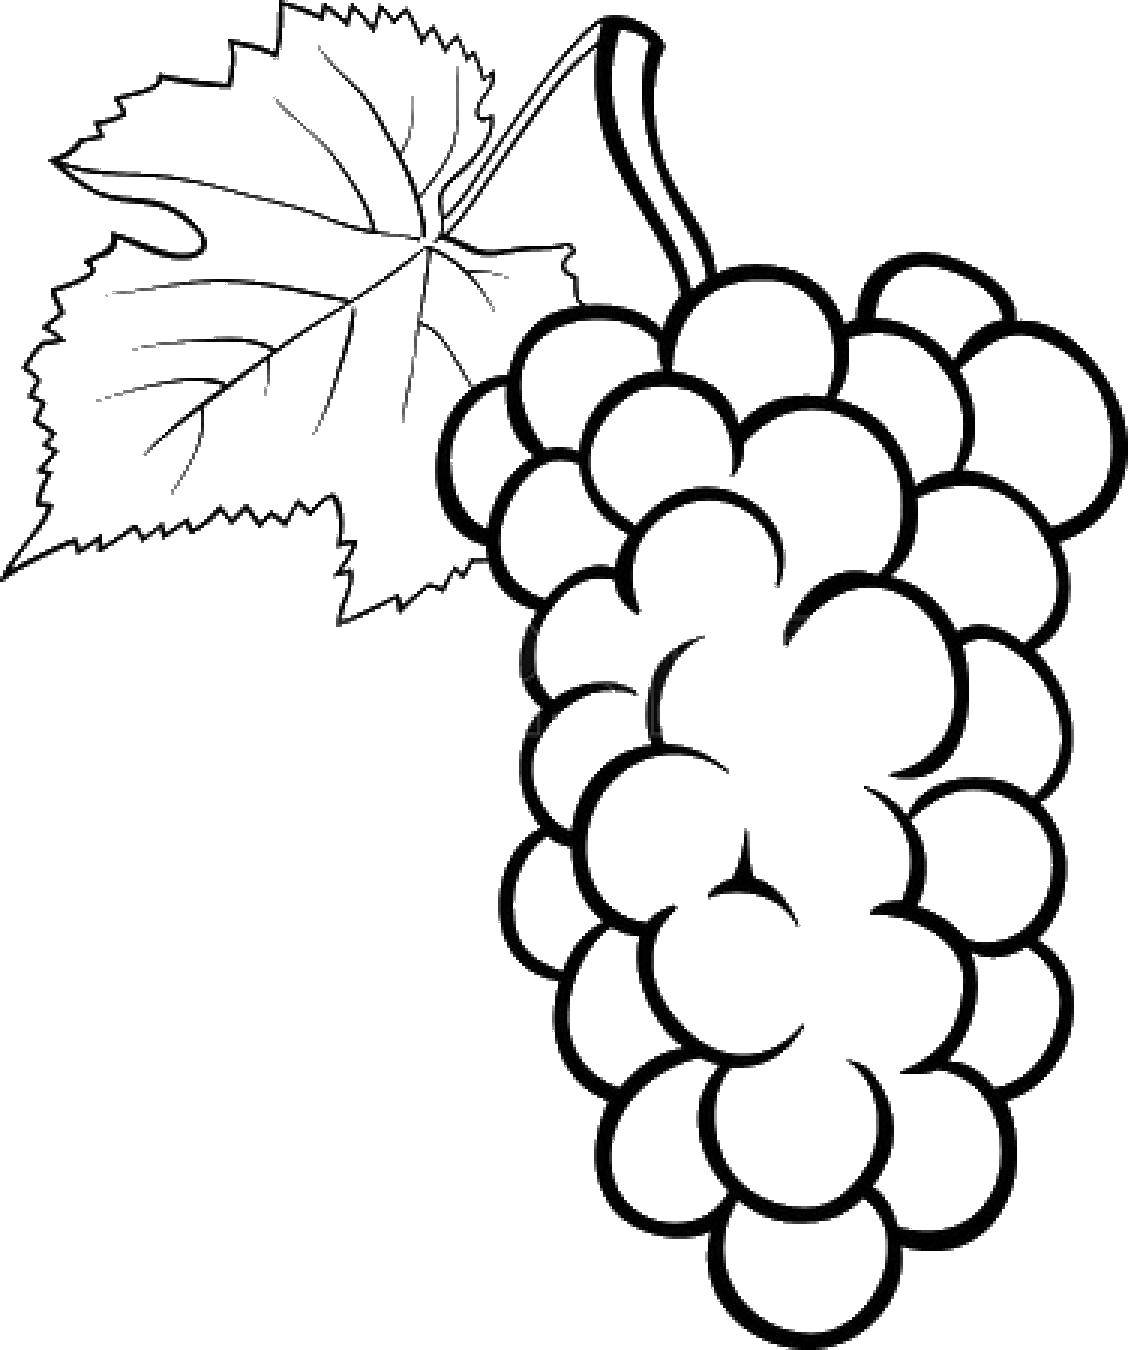 Coloring Grapes. Category fruits. Tags:  grapes, fruits.